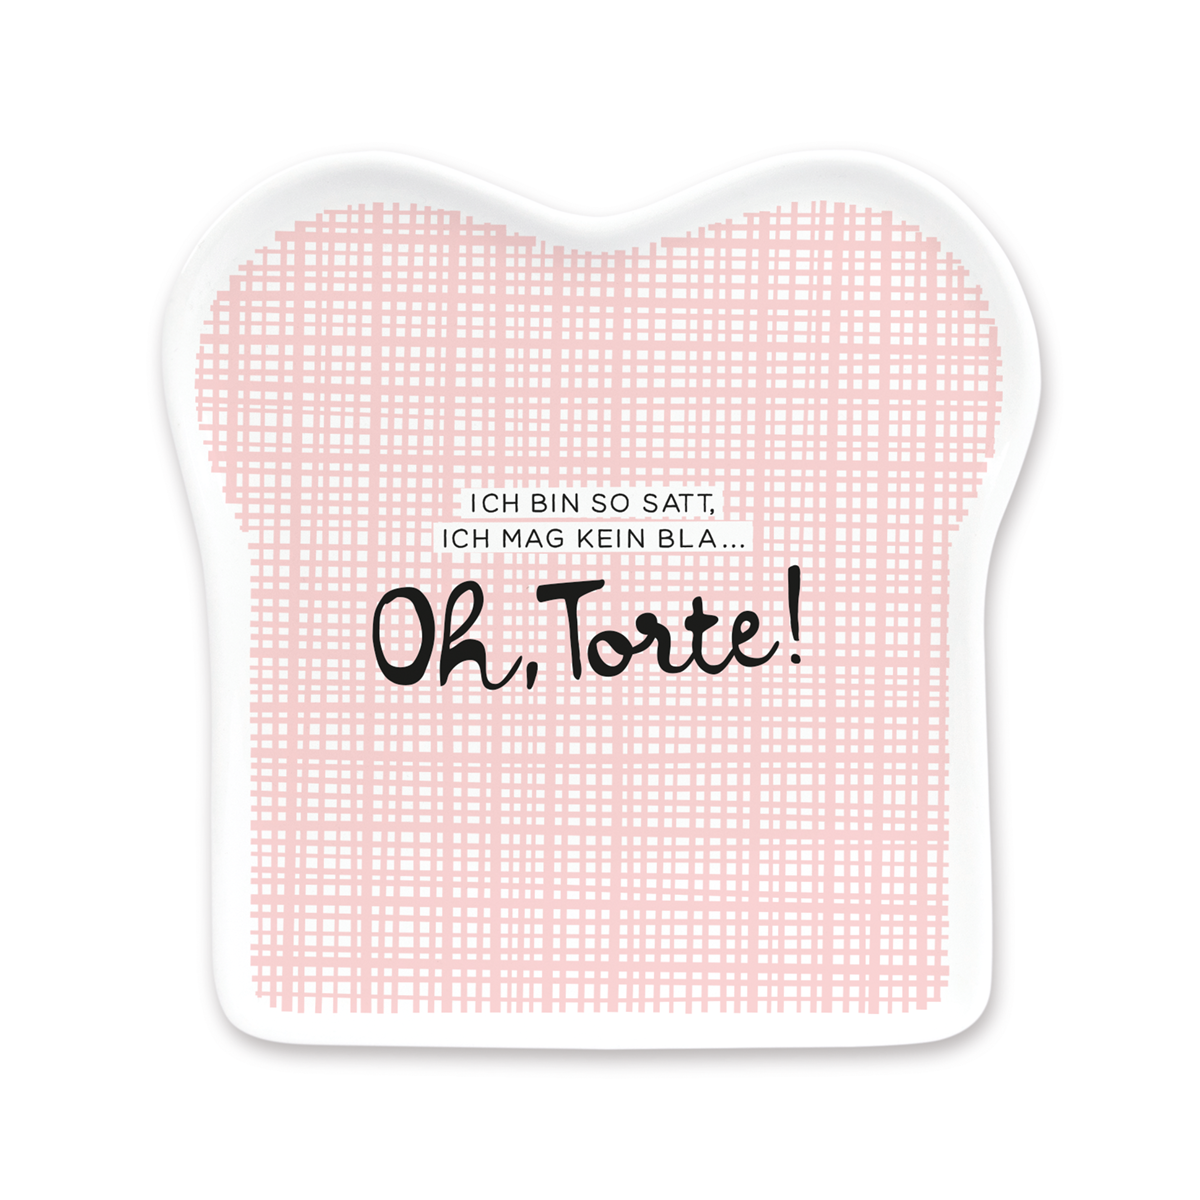 Toastteller - Oh, Torte